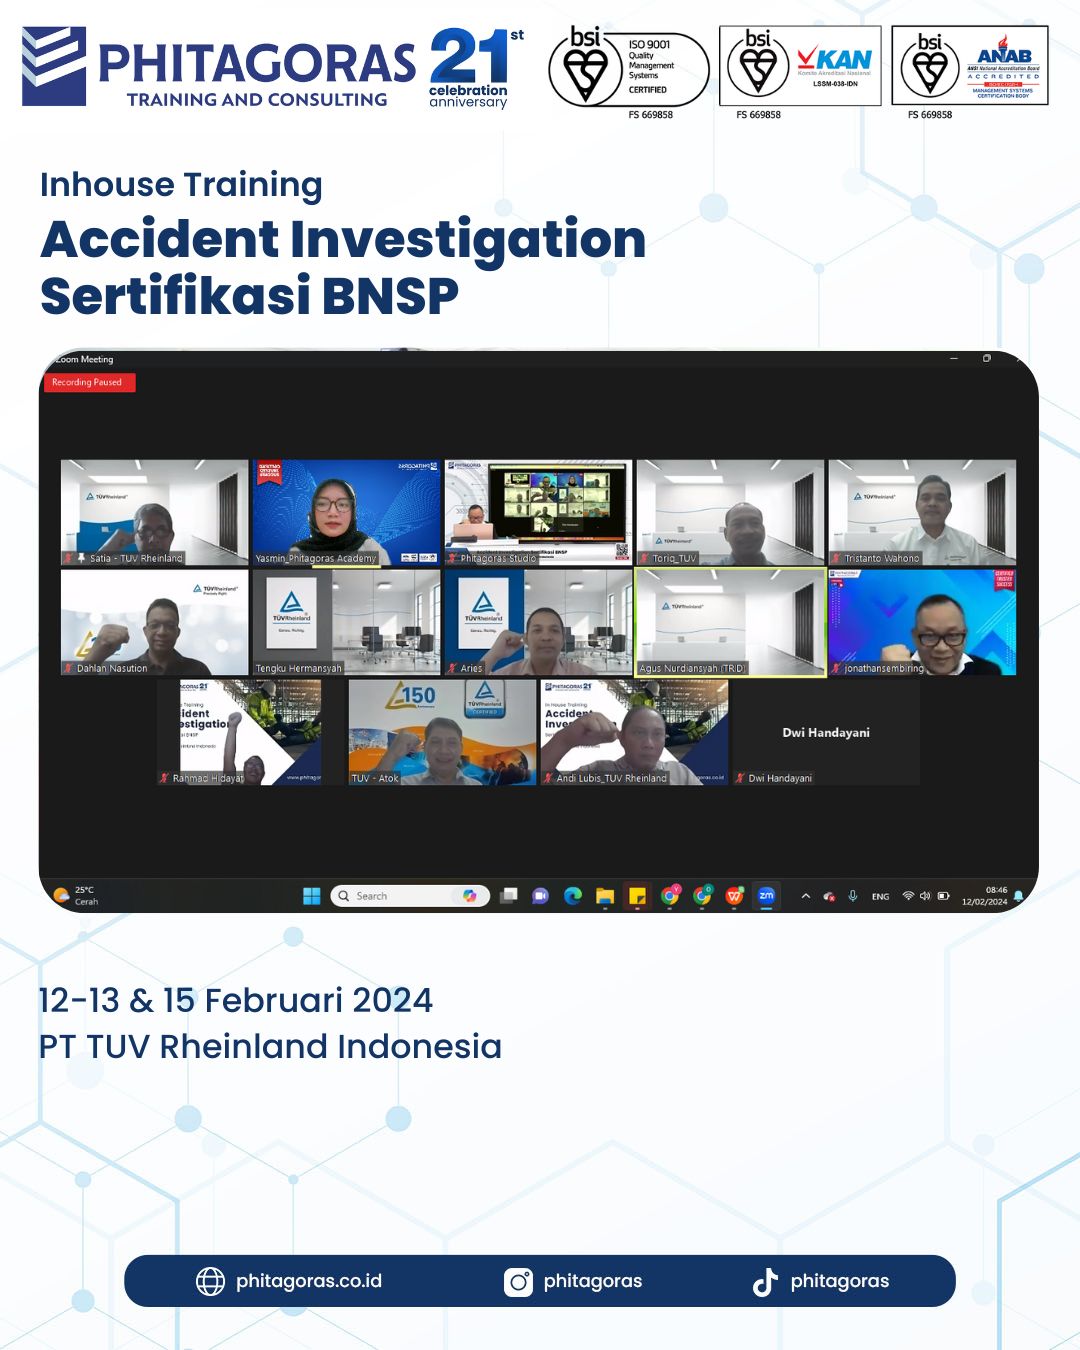 Inhouse Training Accident Investigation Sertifikasi BNSP - PT TUV Rheinland Indonesia